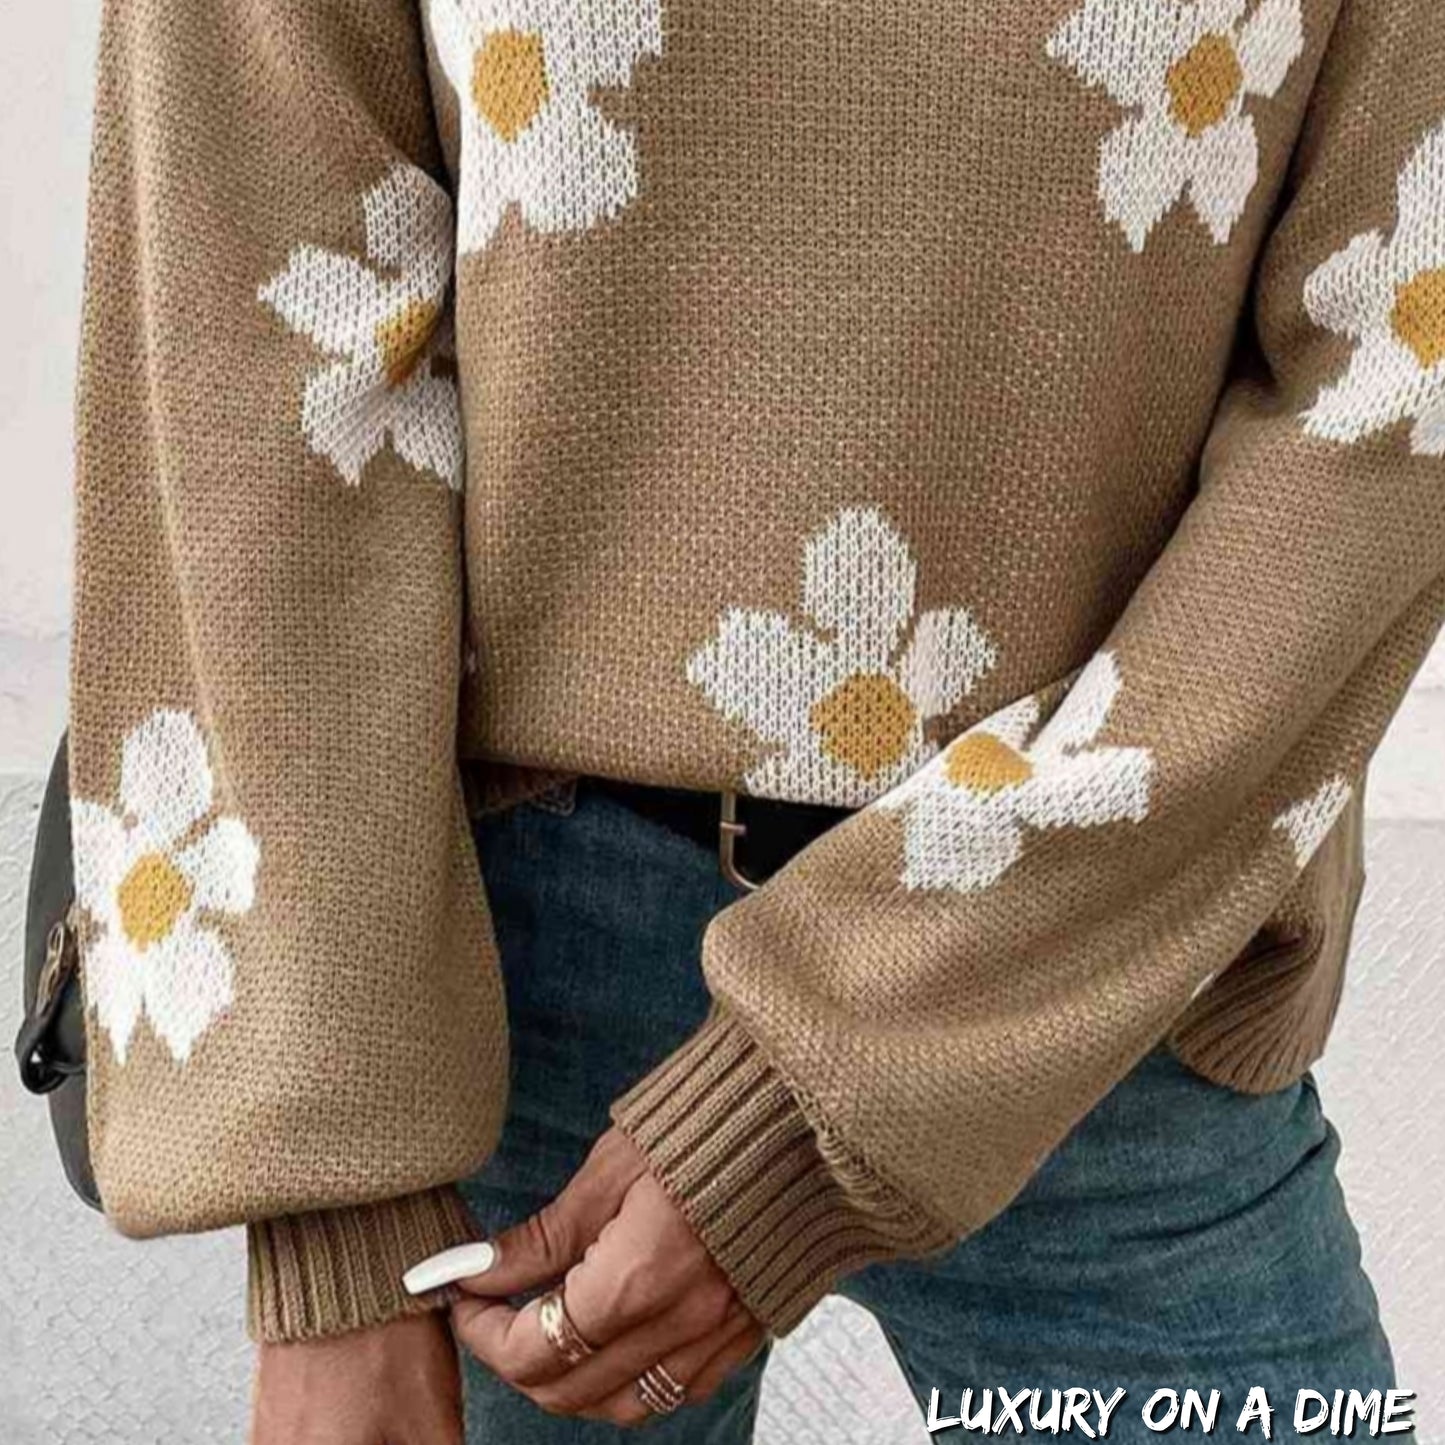 Daisy Flower Knit Minimalist Pullover Classic Long Sleeve Sweater Shirt